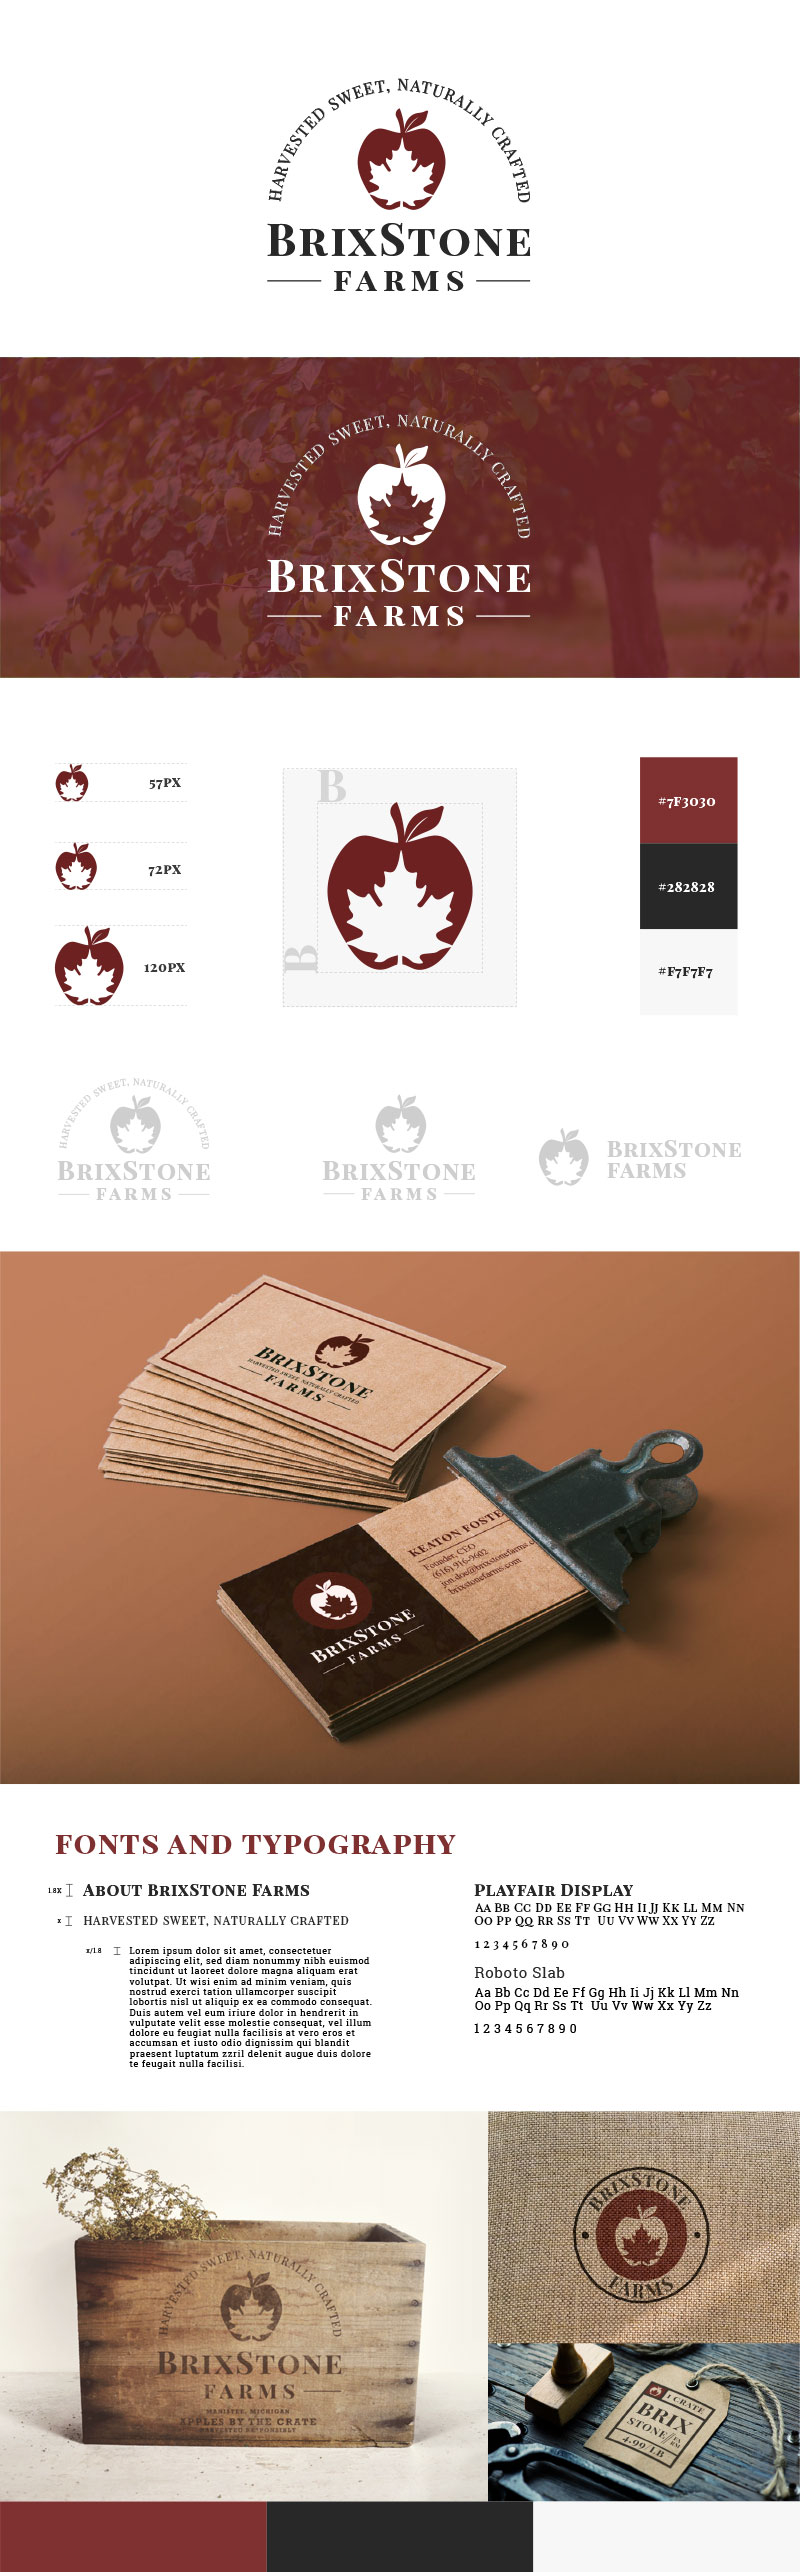 Logo Design and Brand Presentation for Brixstone Farms